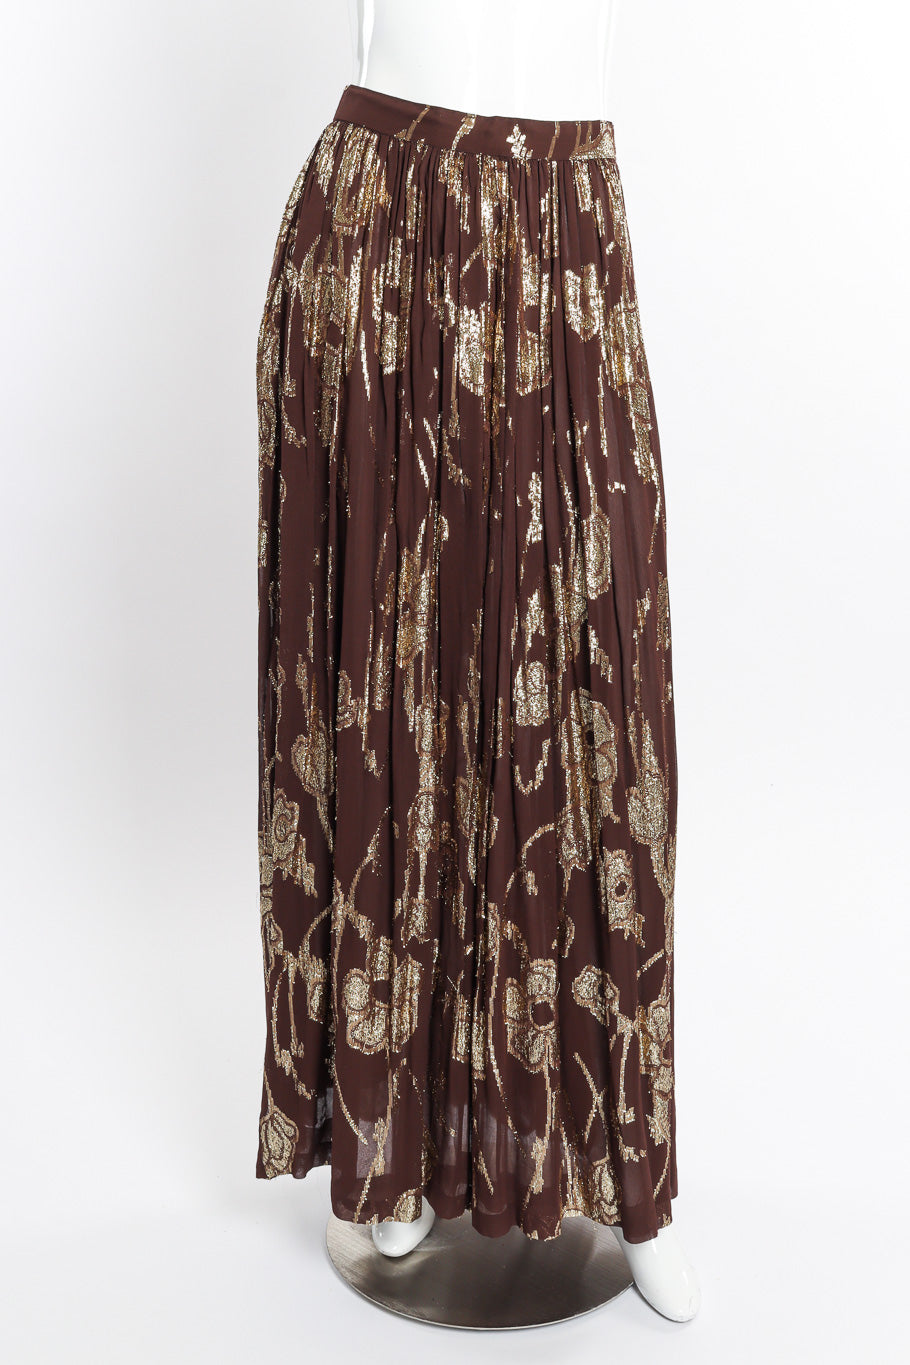 Vintage Adolfo Metallic Top and Skirt Set skirt front on mannequin @recessla